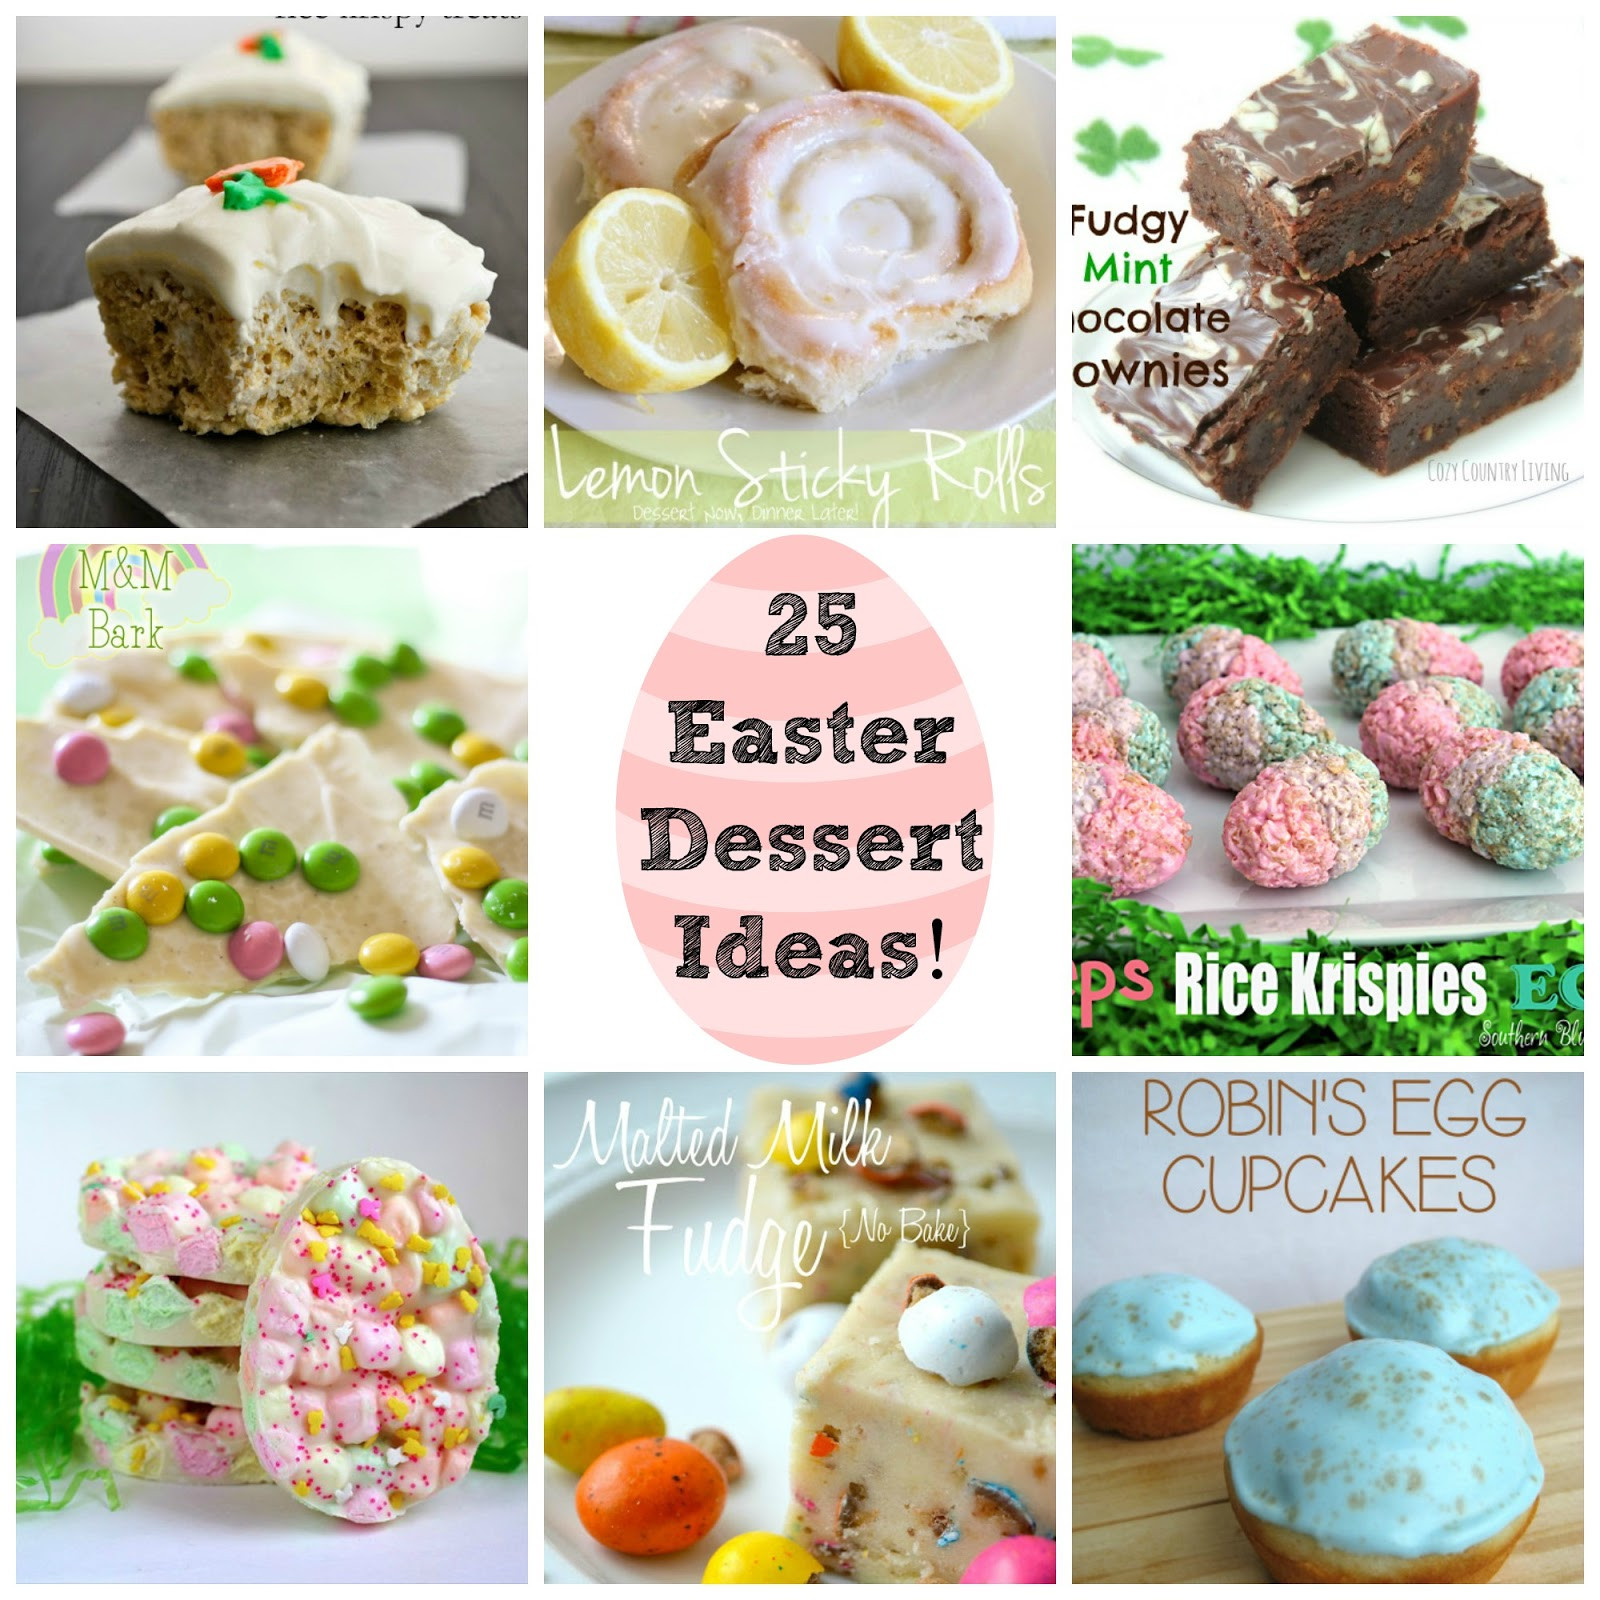 Best Easter Desserts
 The Best Blog Recipes 25 Easter Dessert Ideas Round Up